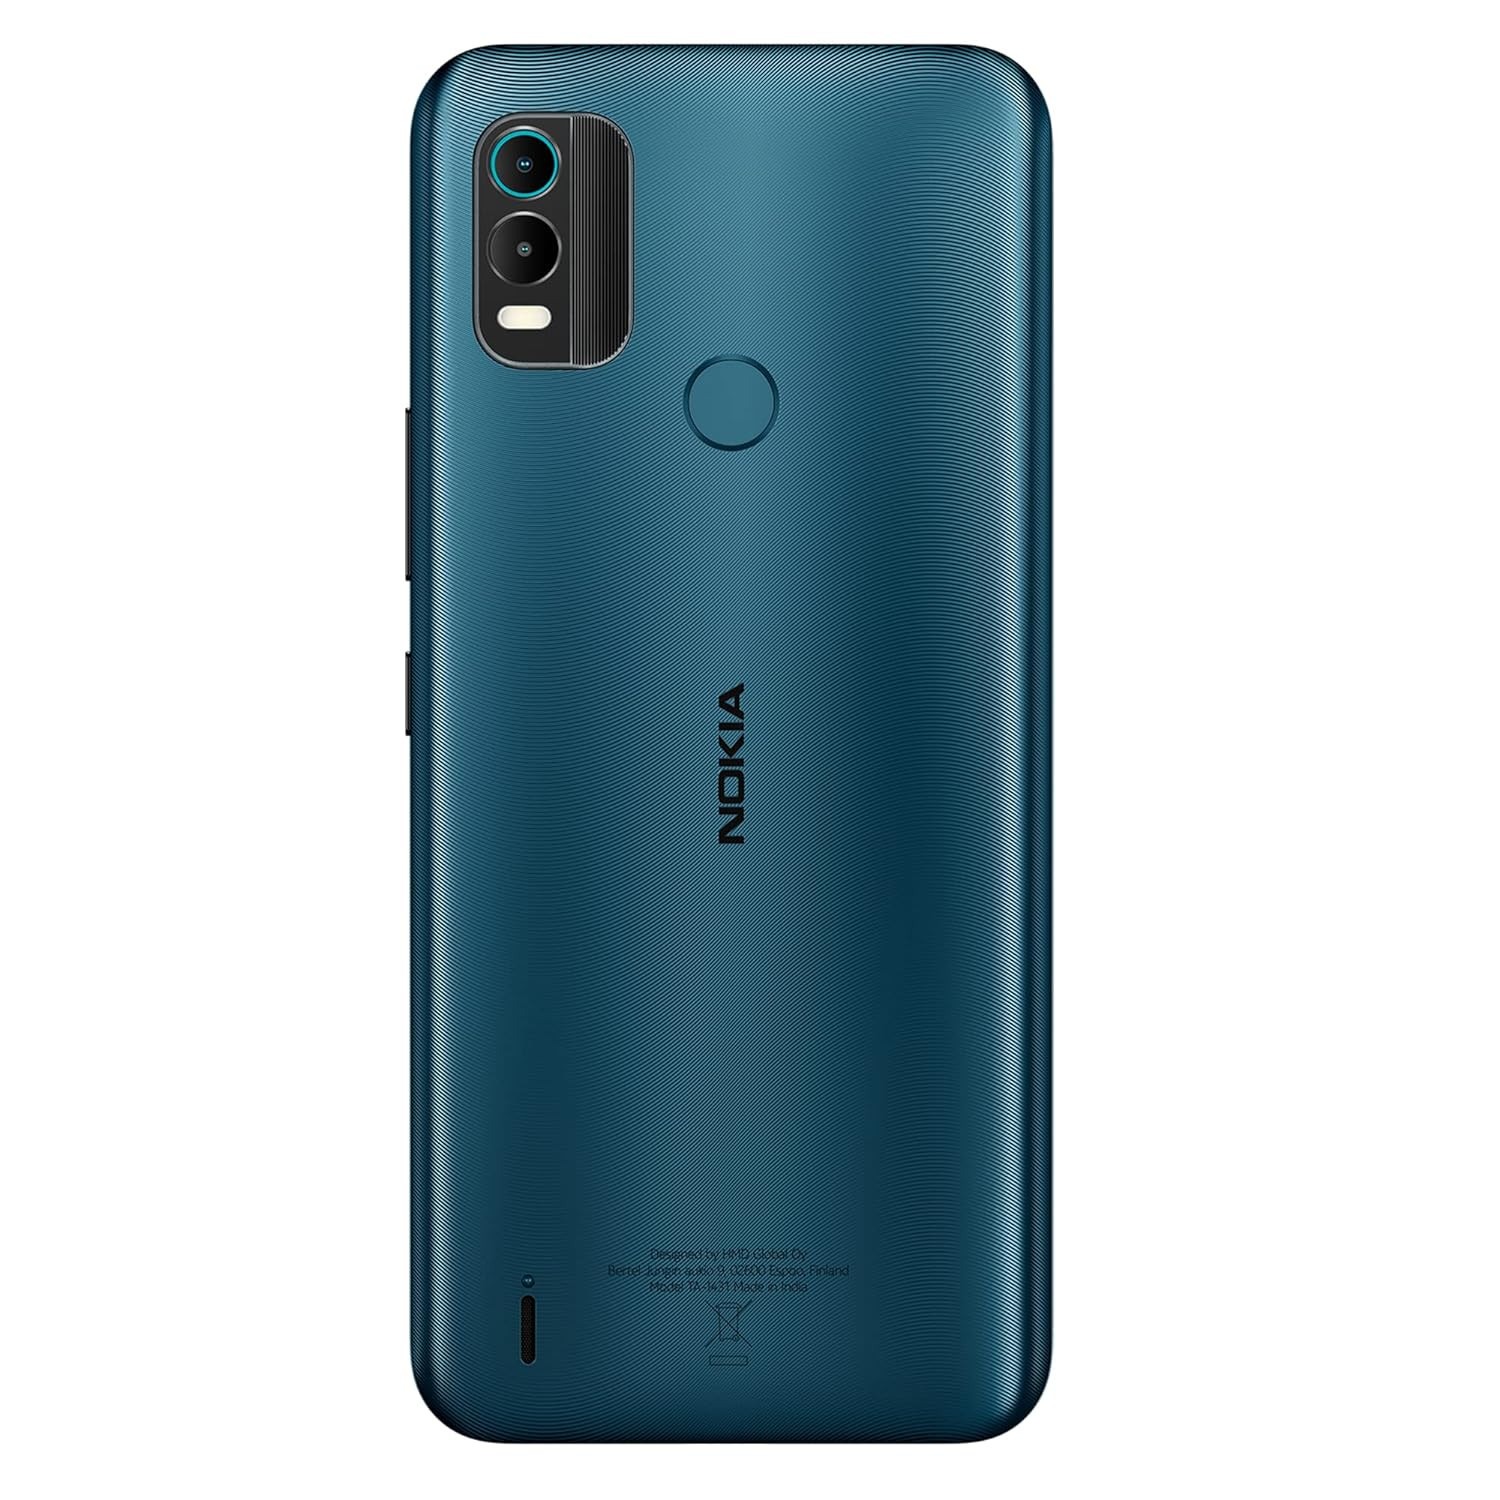 Nokia C21 Plus Android Smartphone, Dual SIM, 3-Day Battery Life, 3GB RAM + 32GB Storage, 13MP Dual Camera with HDR | Dark Cyan